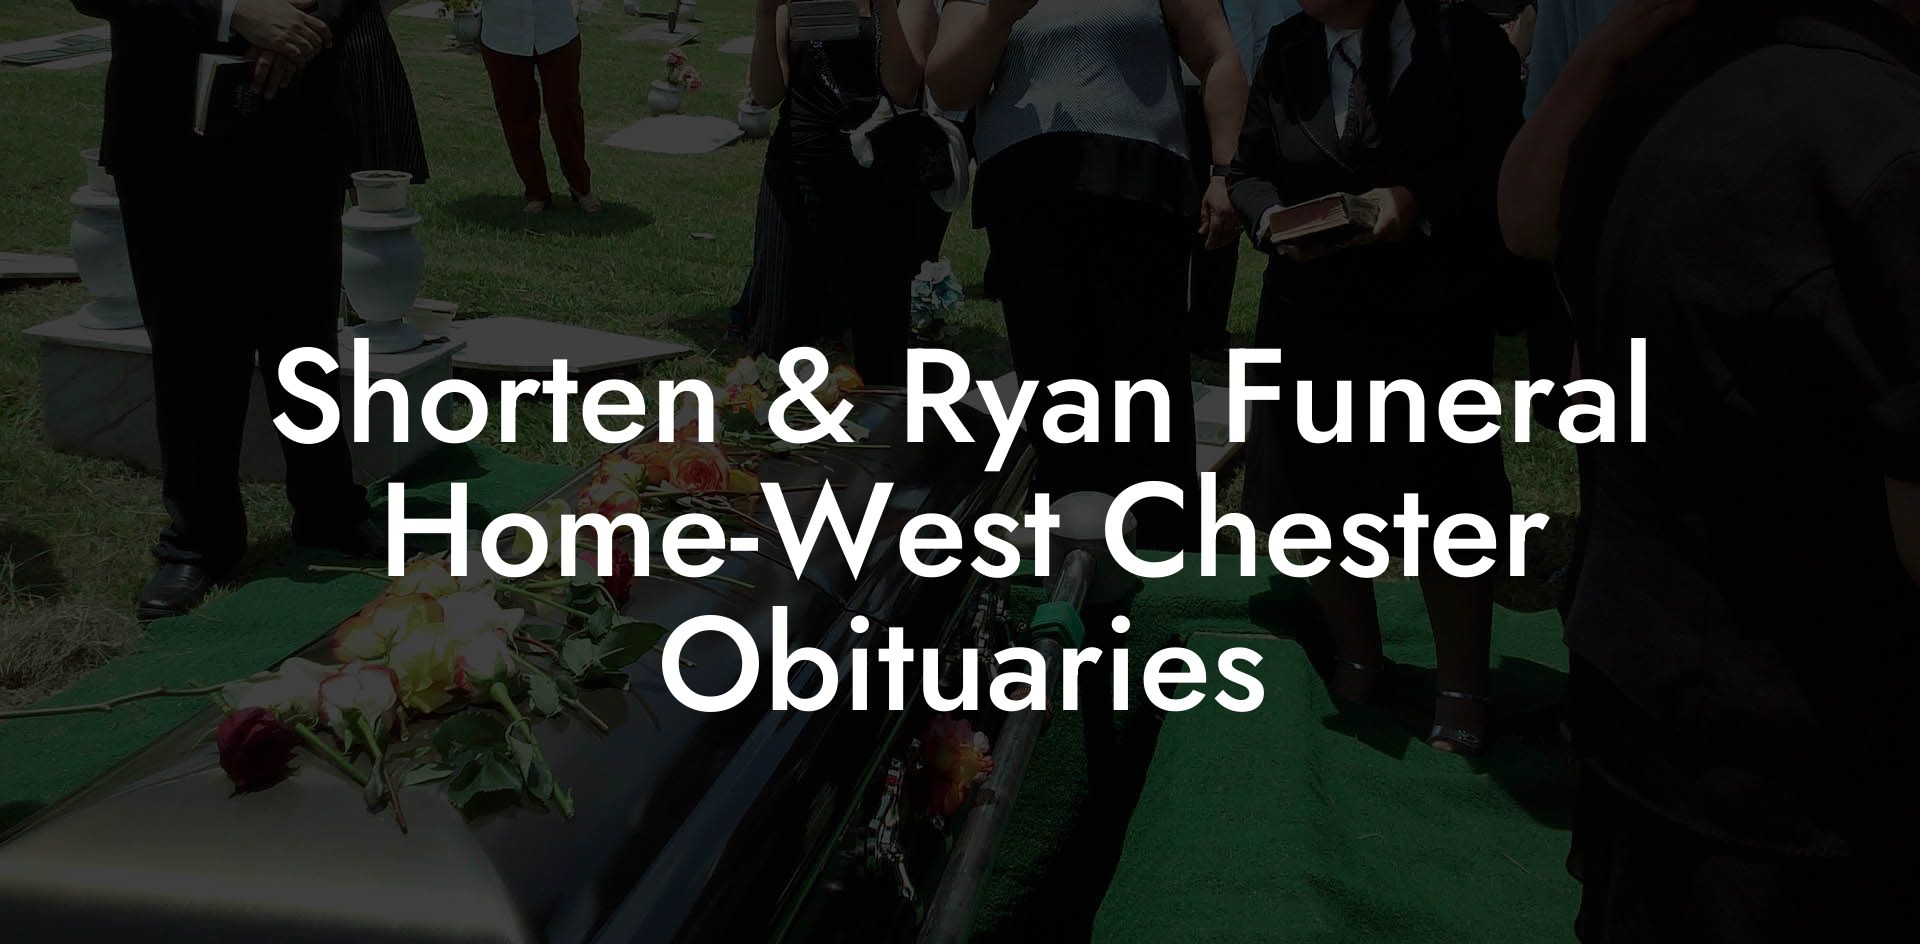 Shorten & Ryan Funeral Home-West Chester Obituaries